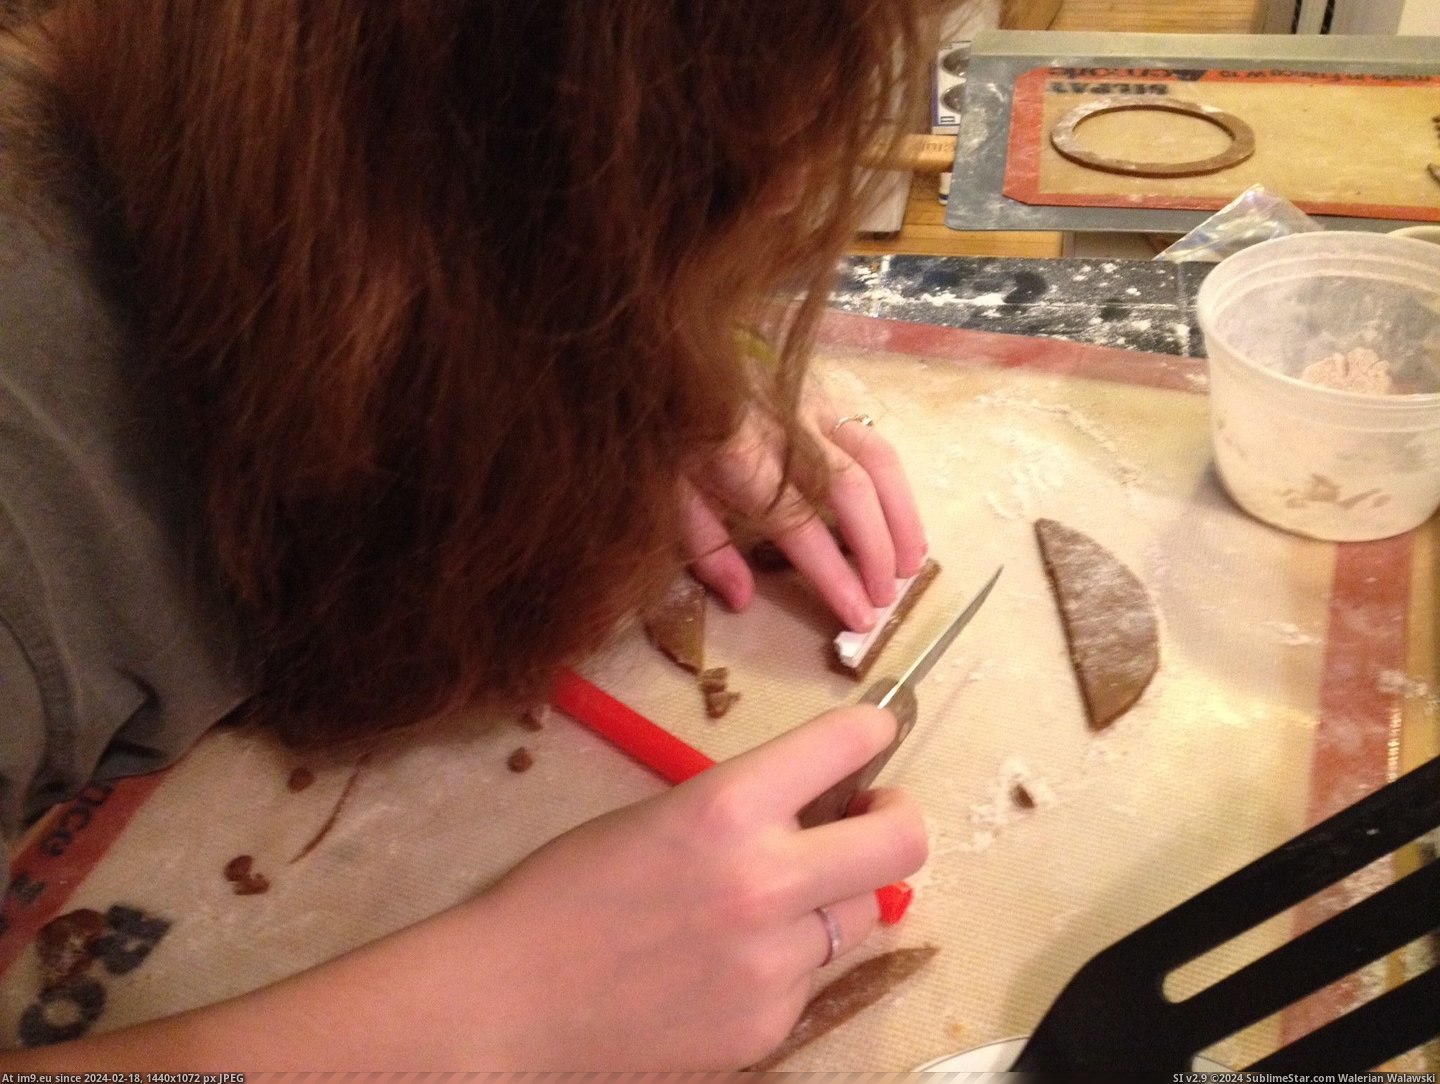 #Daughter #Tower #Pisa #Gingerbread #Leaning [Pics] My Daughter and I Made a Gingerbread Leaning Tower of Pisa 5 Pic. (Изображение из альбом My r/PICS favs))